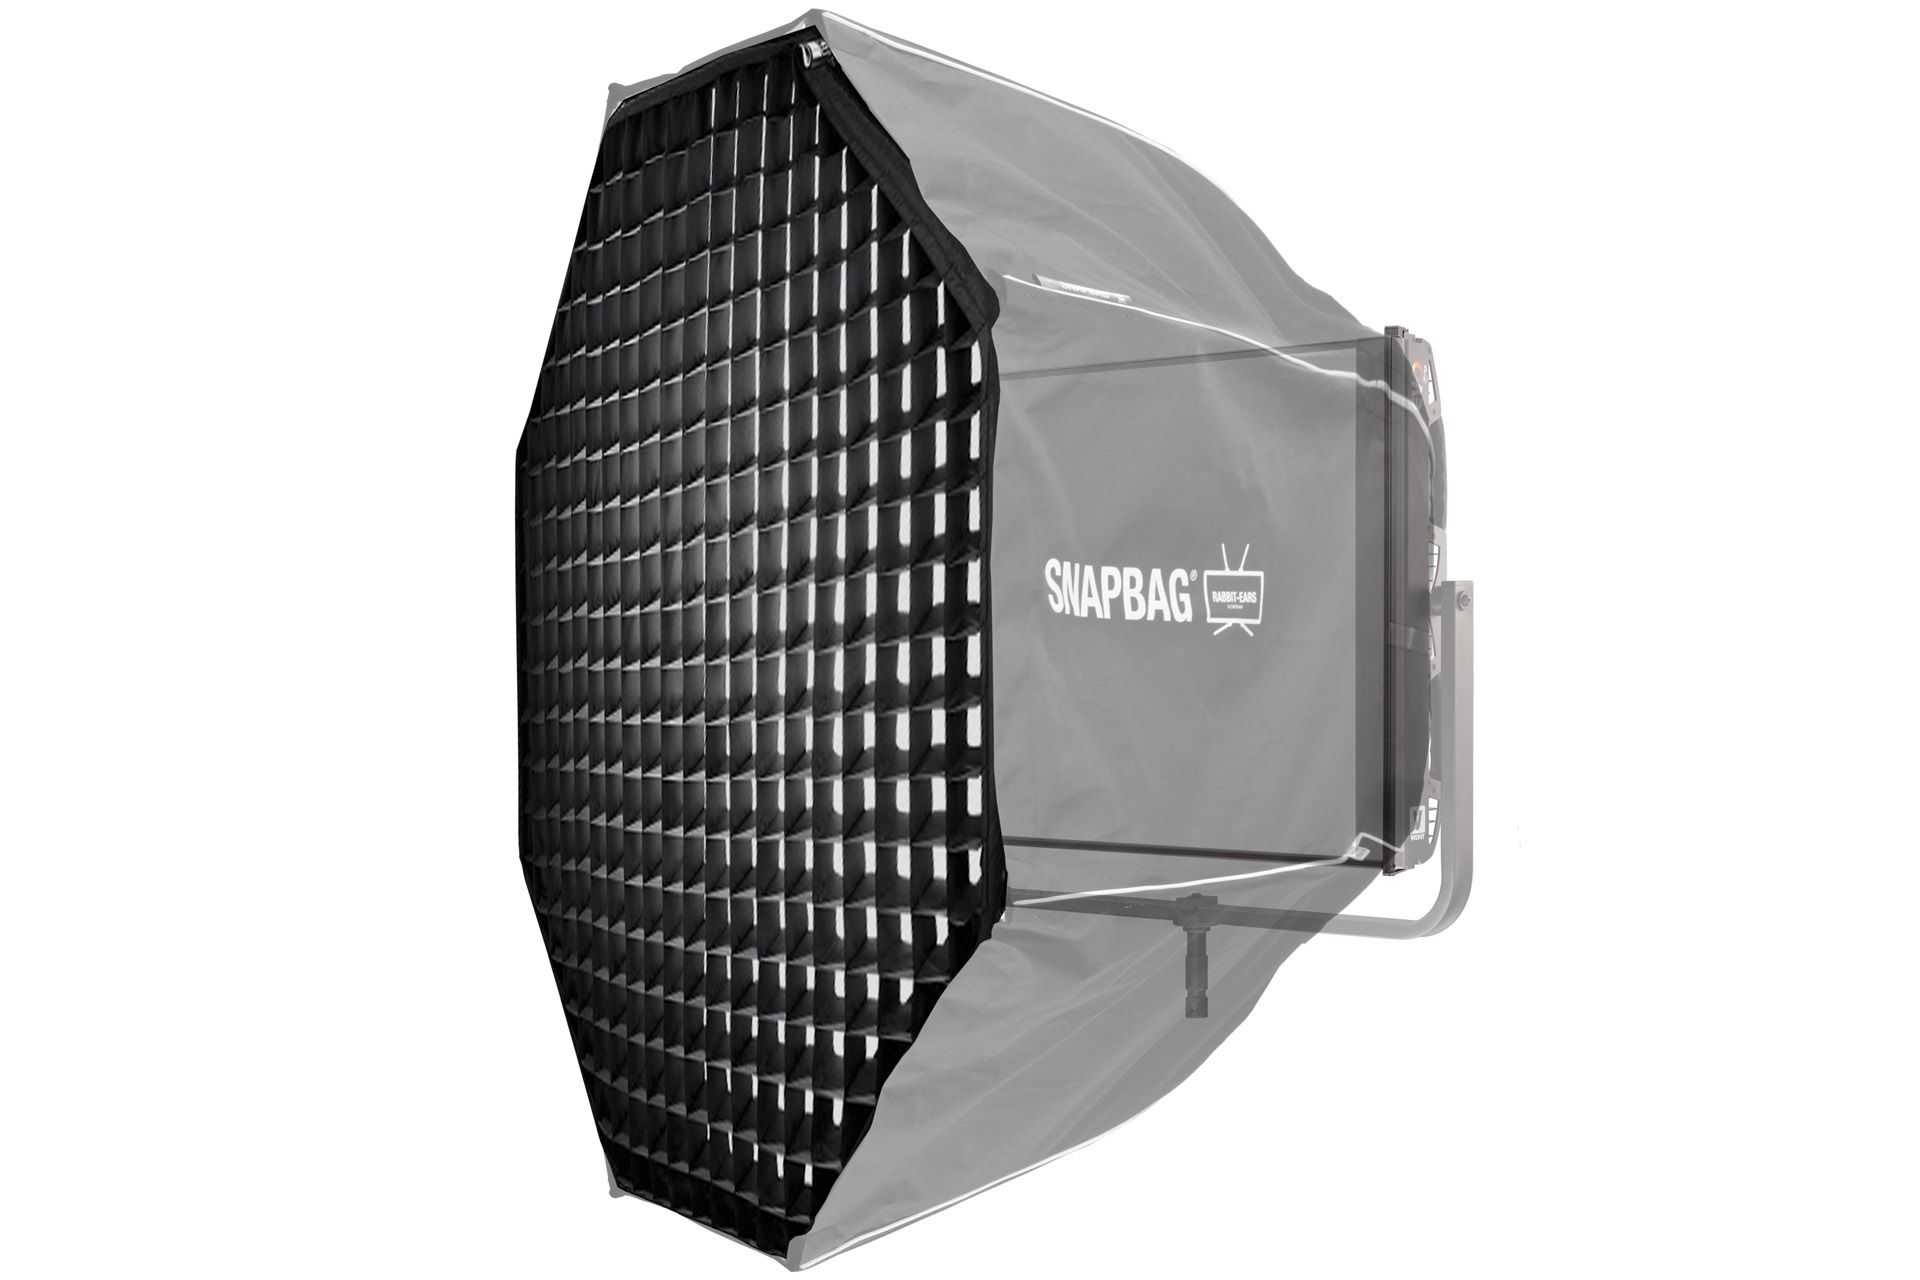 OCTA 7 foldable Snapgrid for Snapbag 1,5m diameter